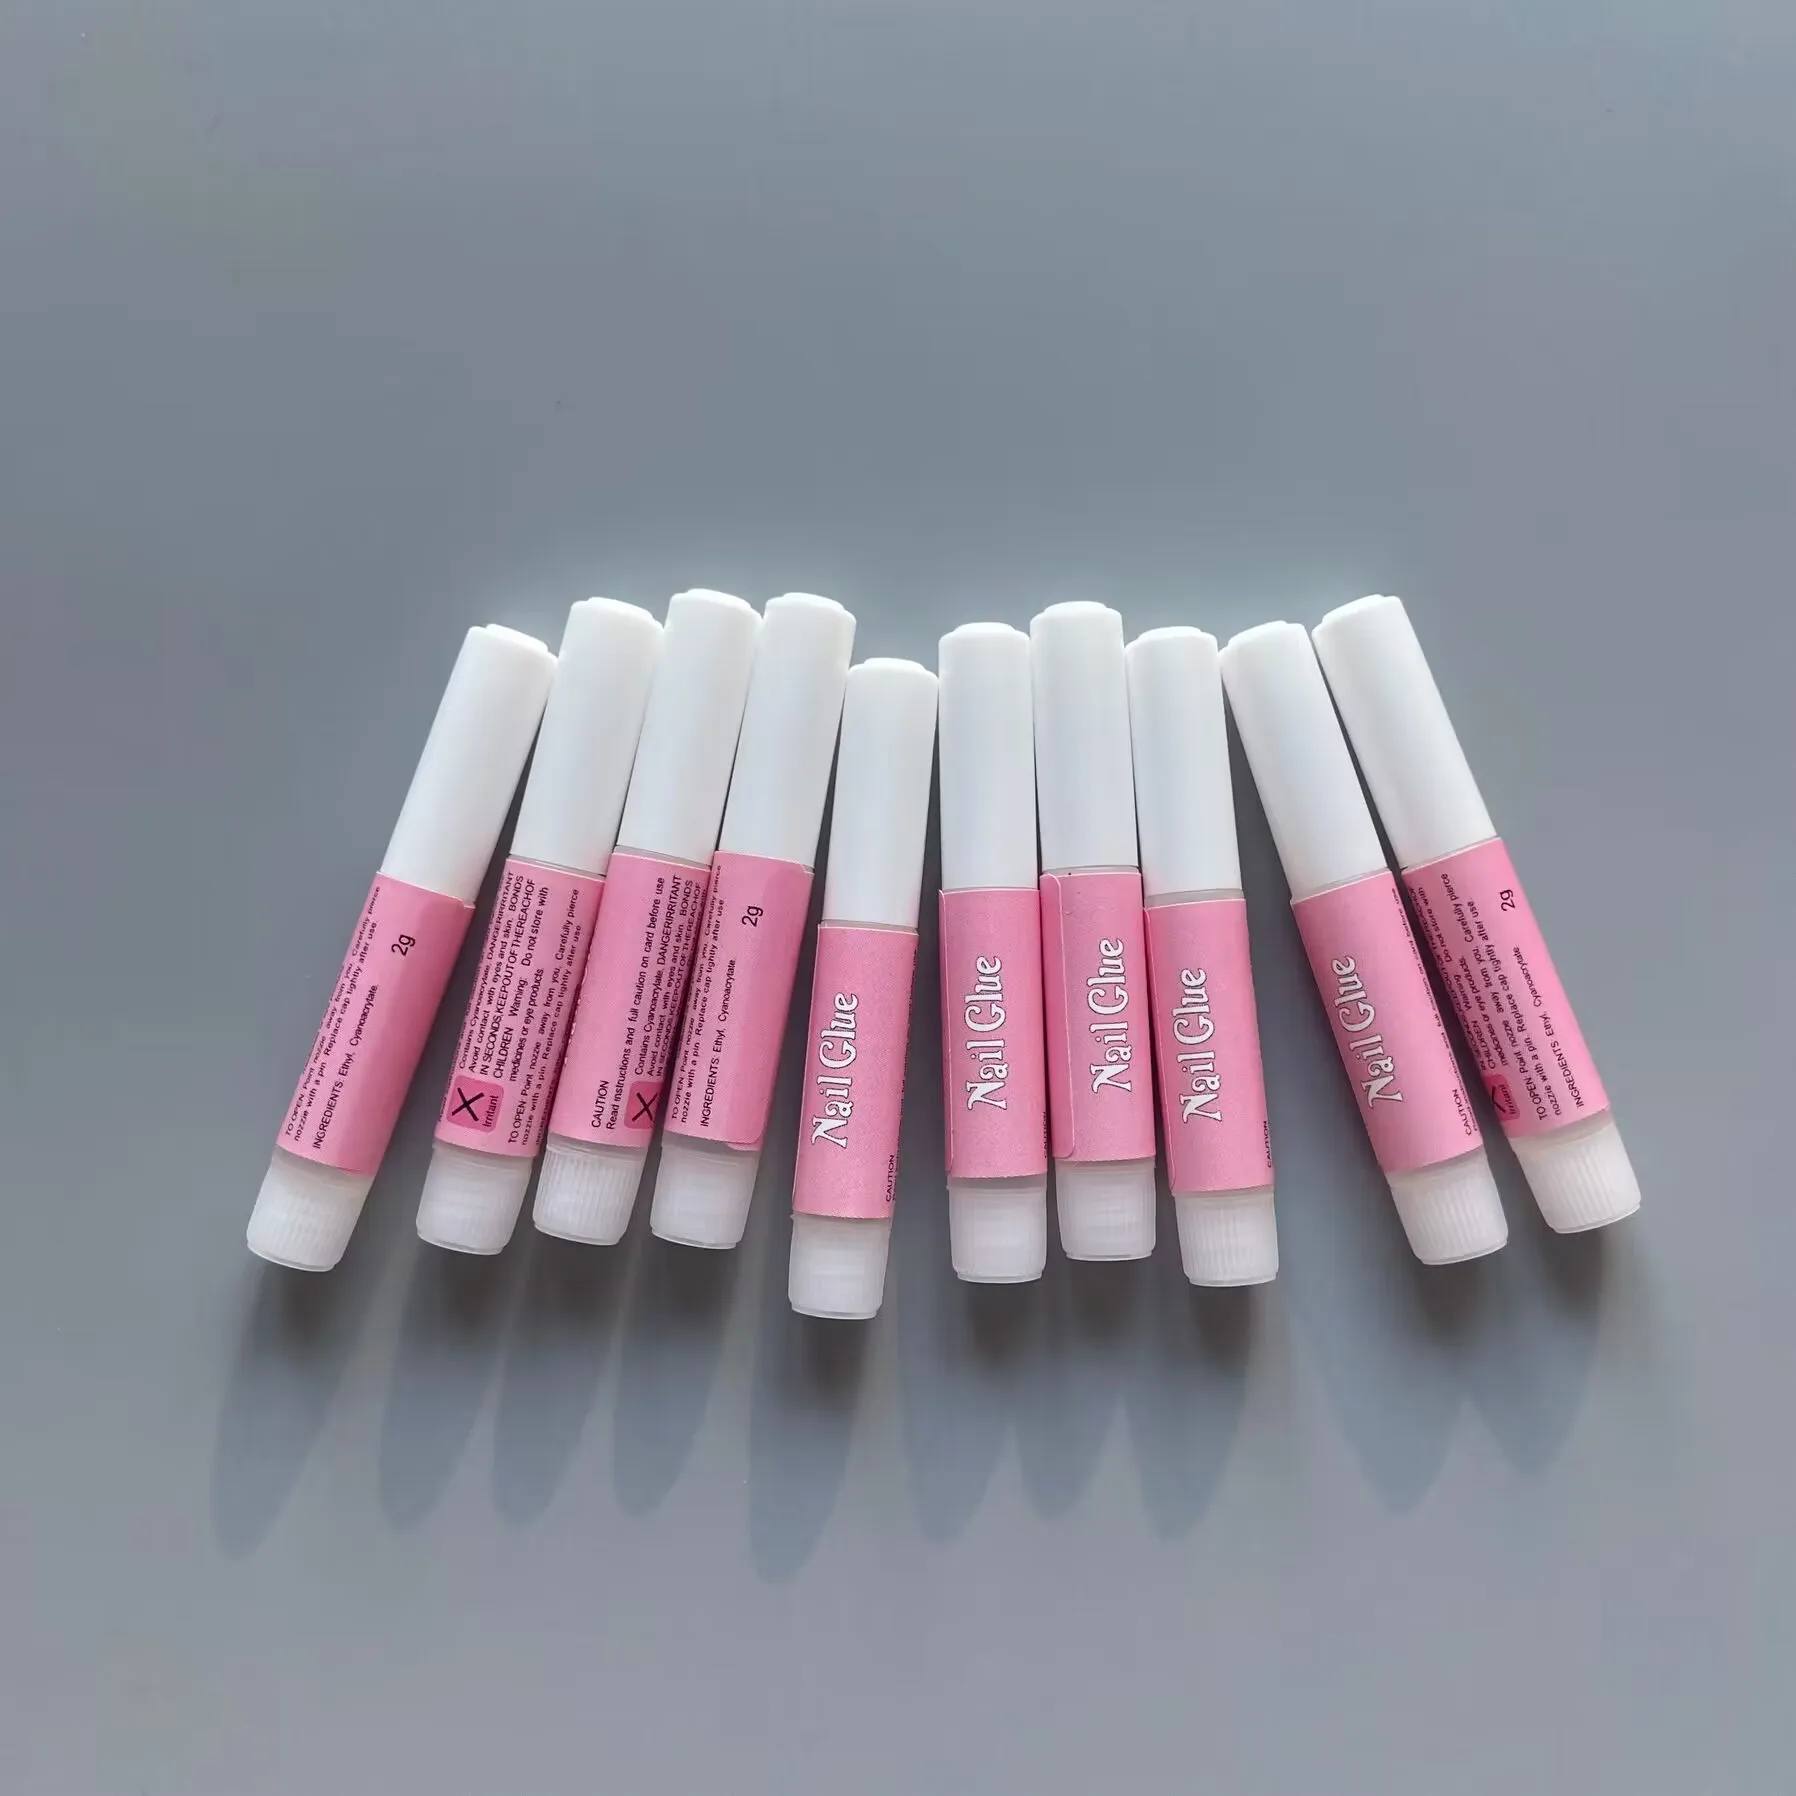 

10Pcs/Bag Mini Beauty False Nails Glue Decorate Tips Acrylic Glue on Nails Art Accessories Fake Nail Extension Nail Glue 2g